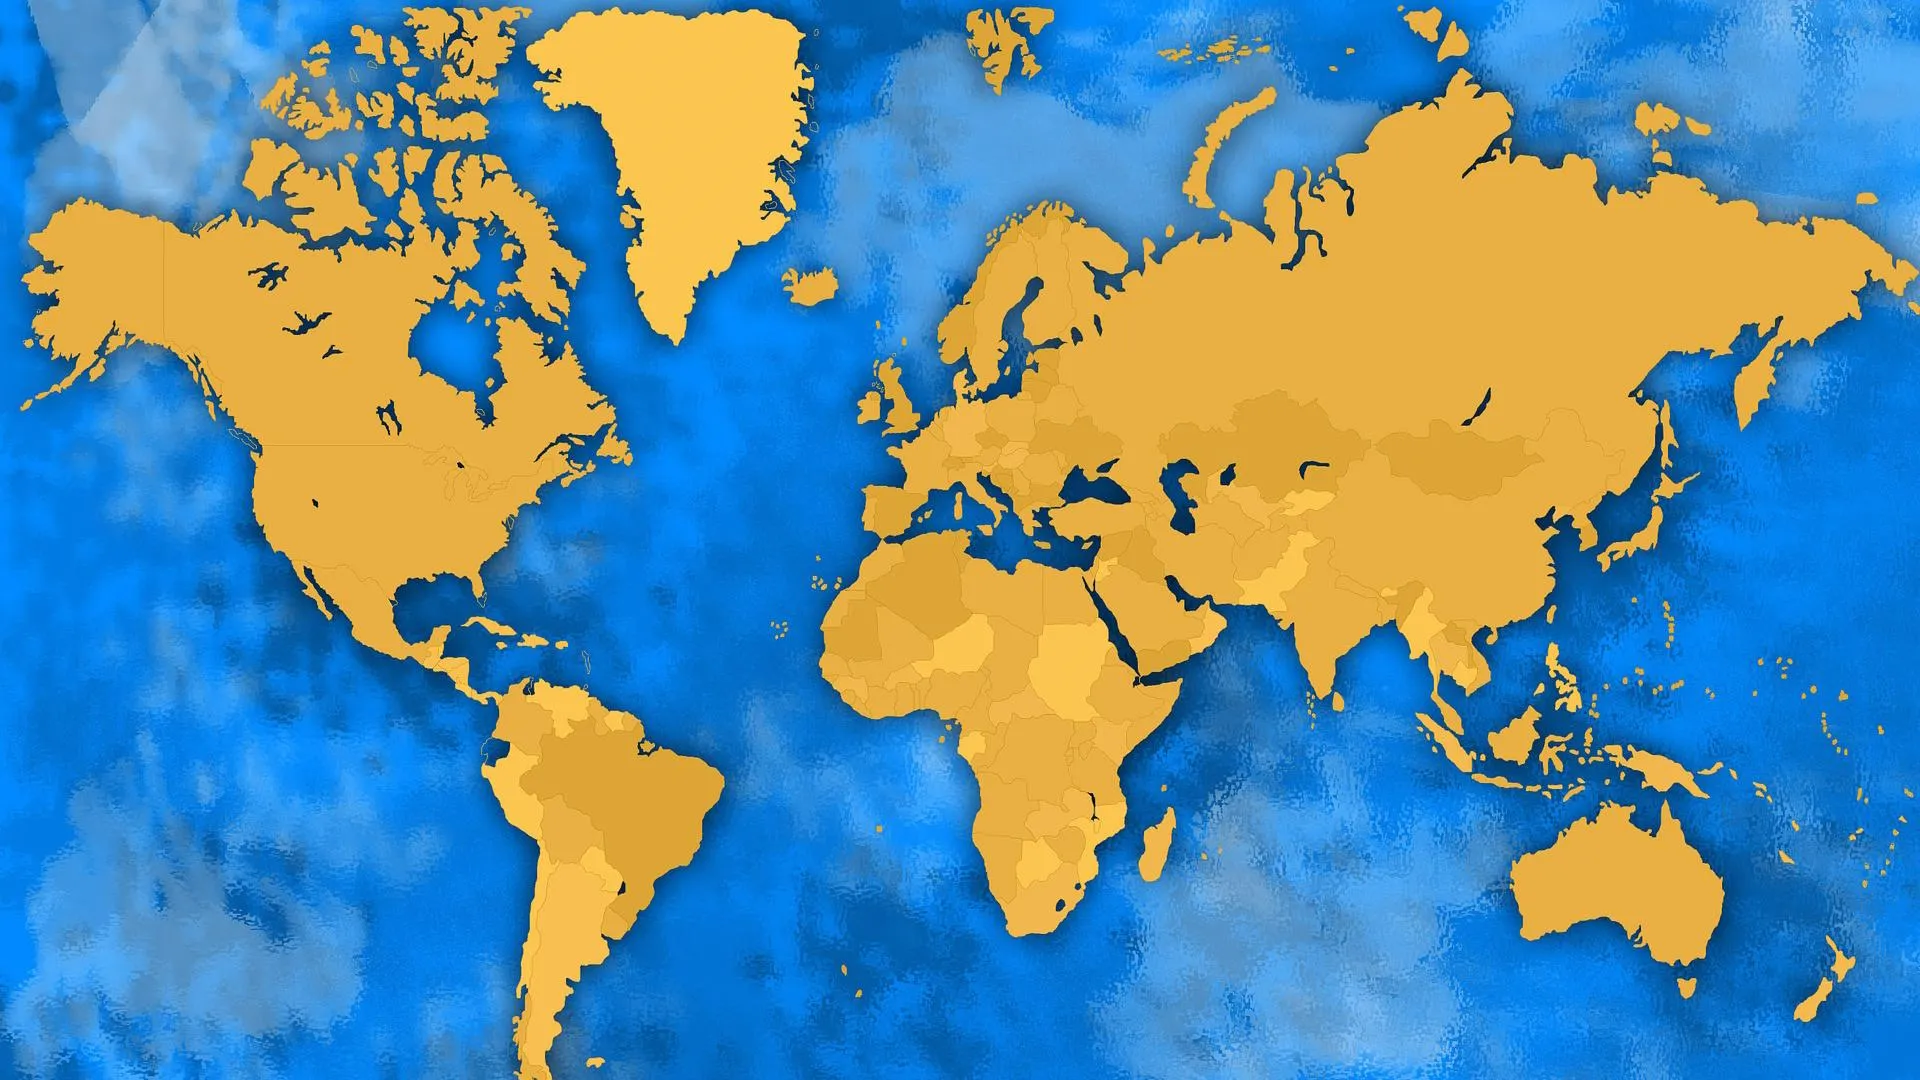 csd_worldmap